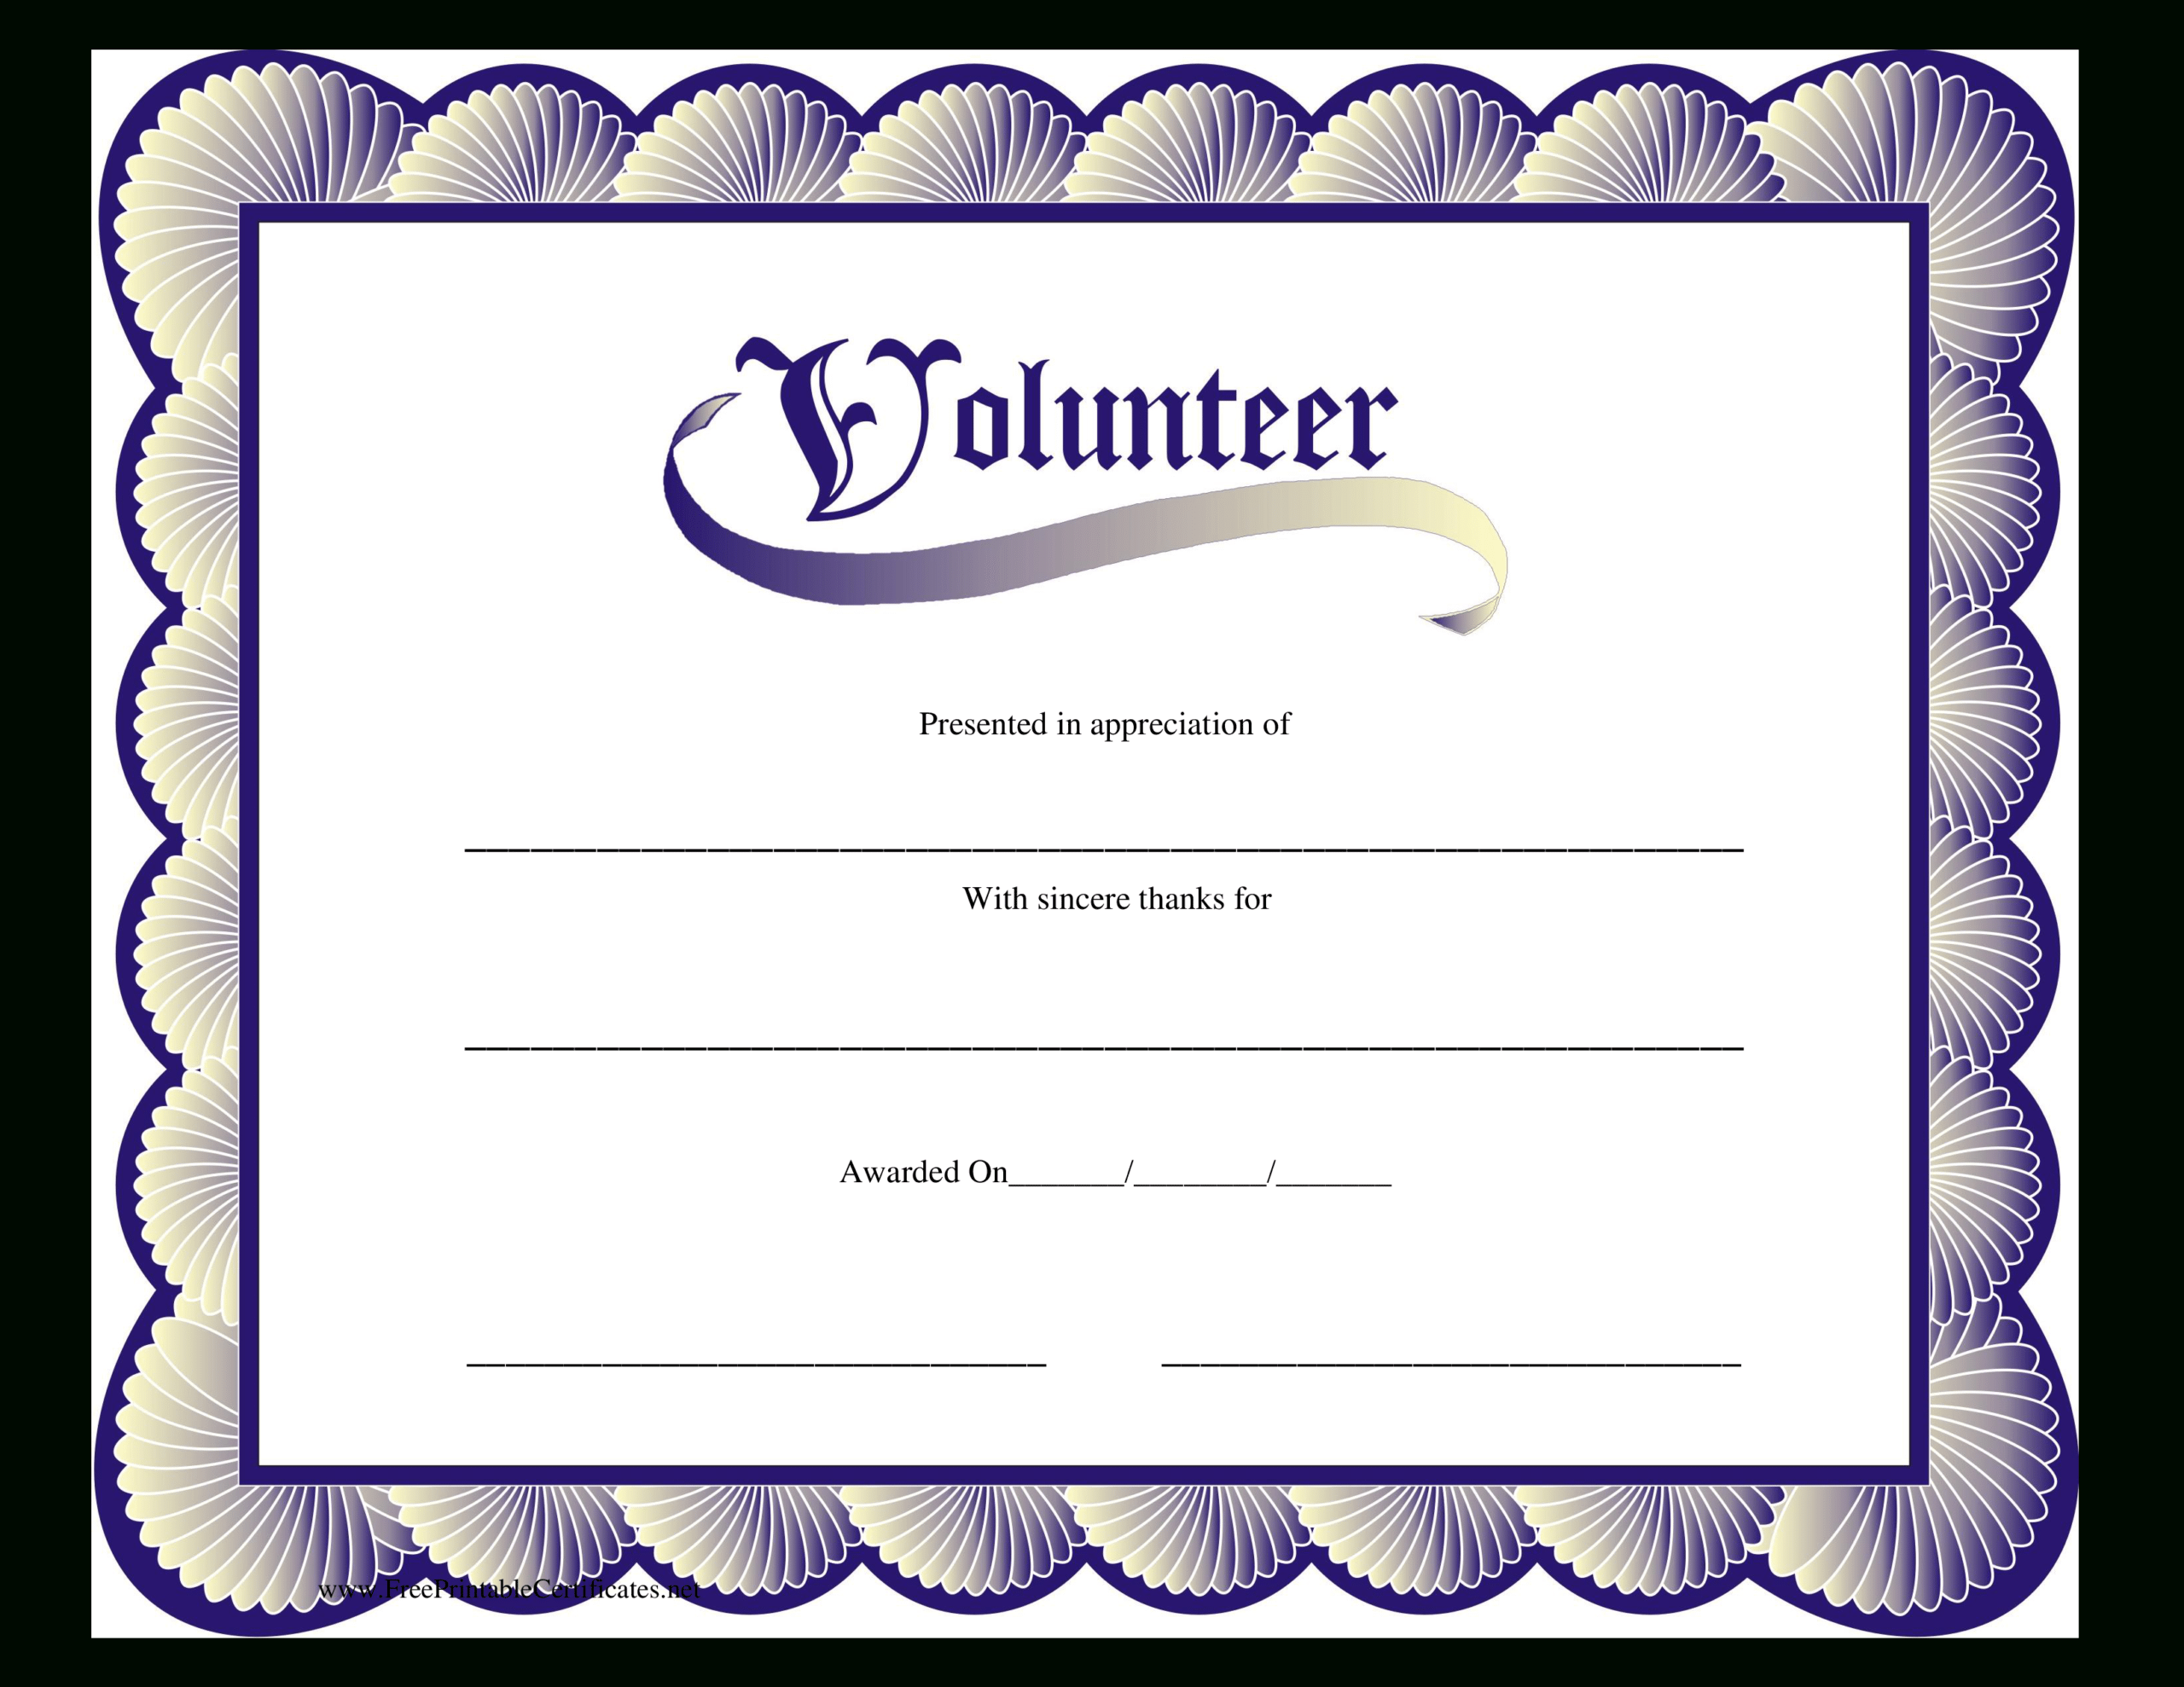 Volunteer Certificate | Templates At Allbusinesstemplates With Regard To Volunteer Certificate Template